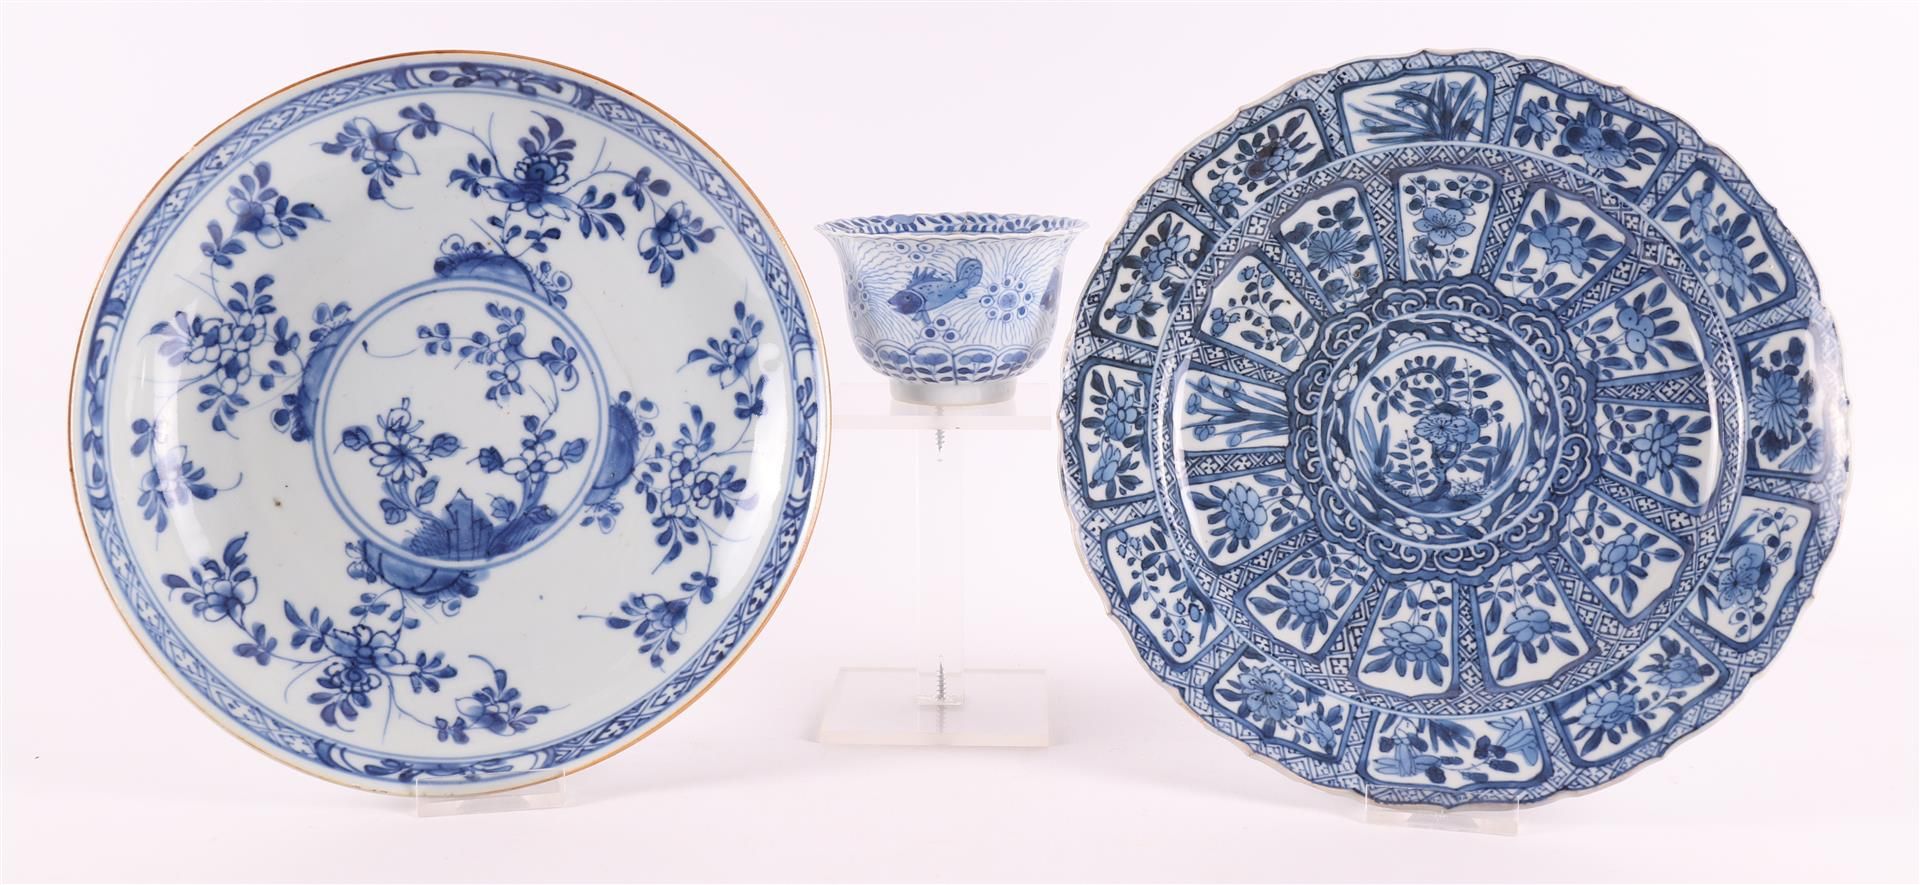 A blue/white porcelain contoured dish, China, Kangxi, around 1700.